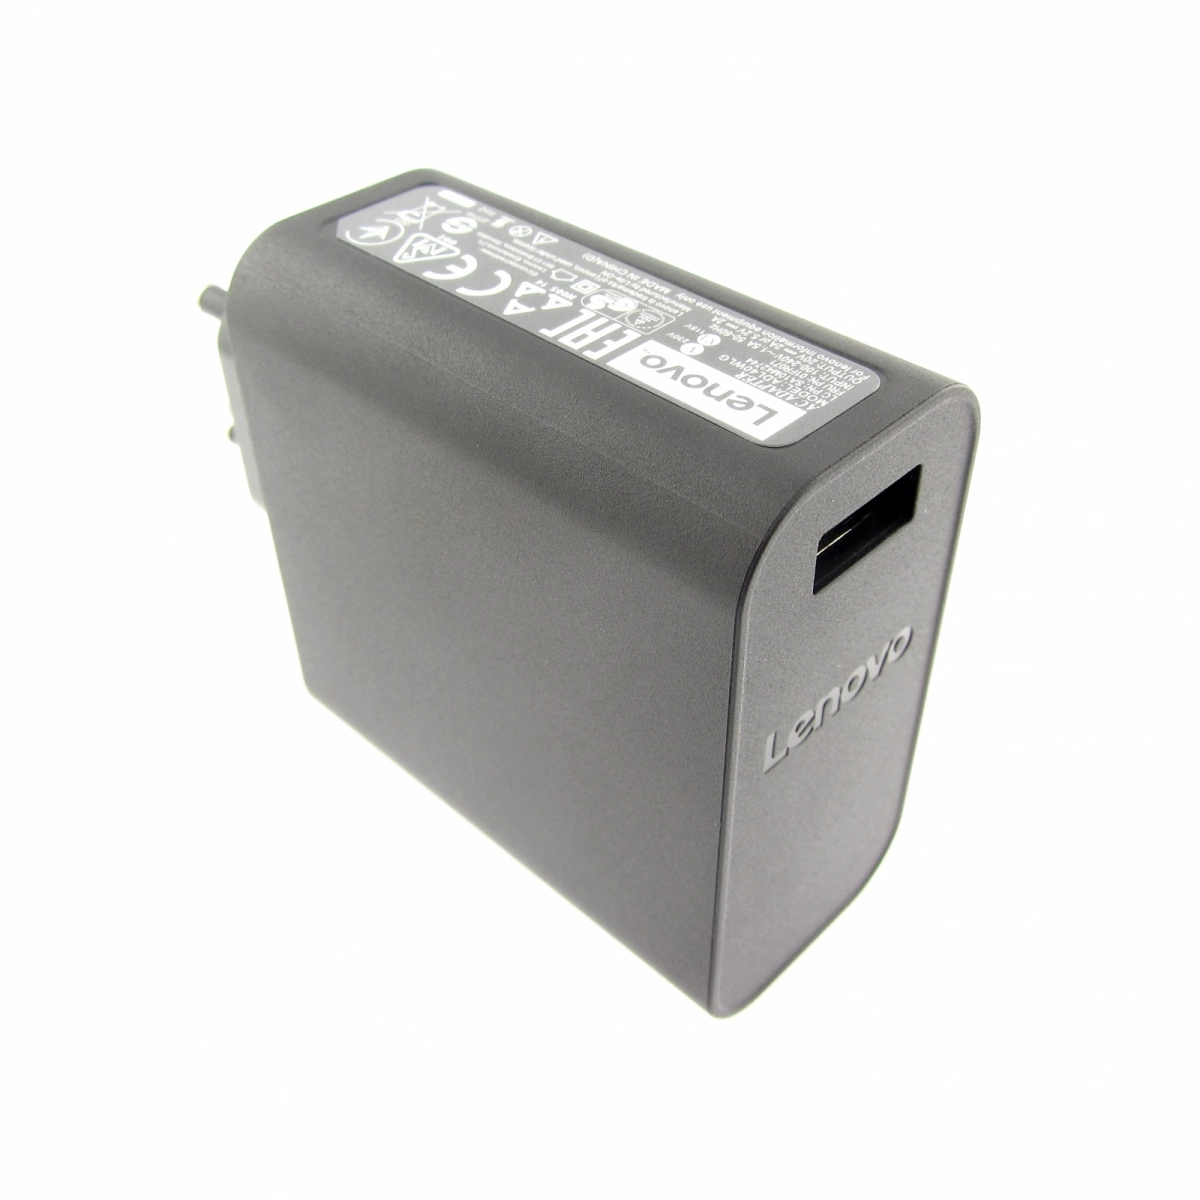 Original Netzteil für LENOVO ADL40WDG 36200565, 20V, 2A, Stecker USB, ohne USB-Kabel